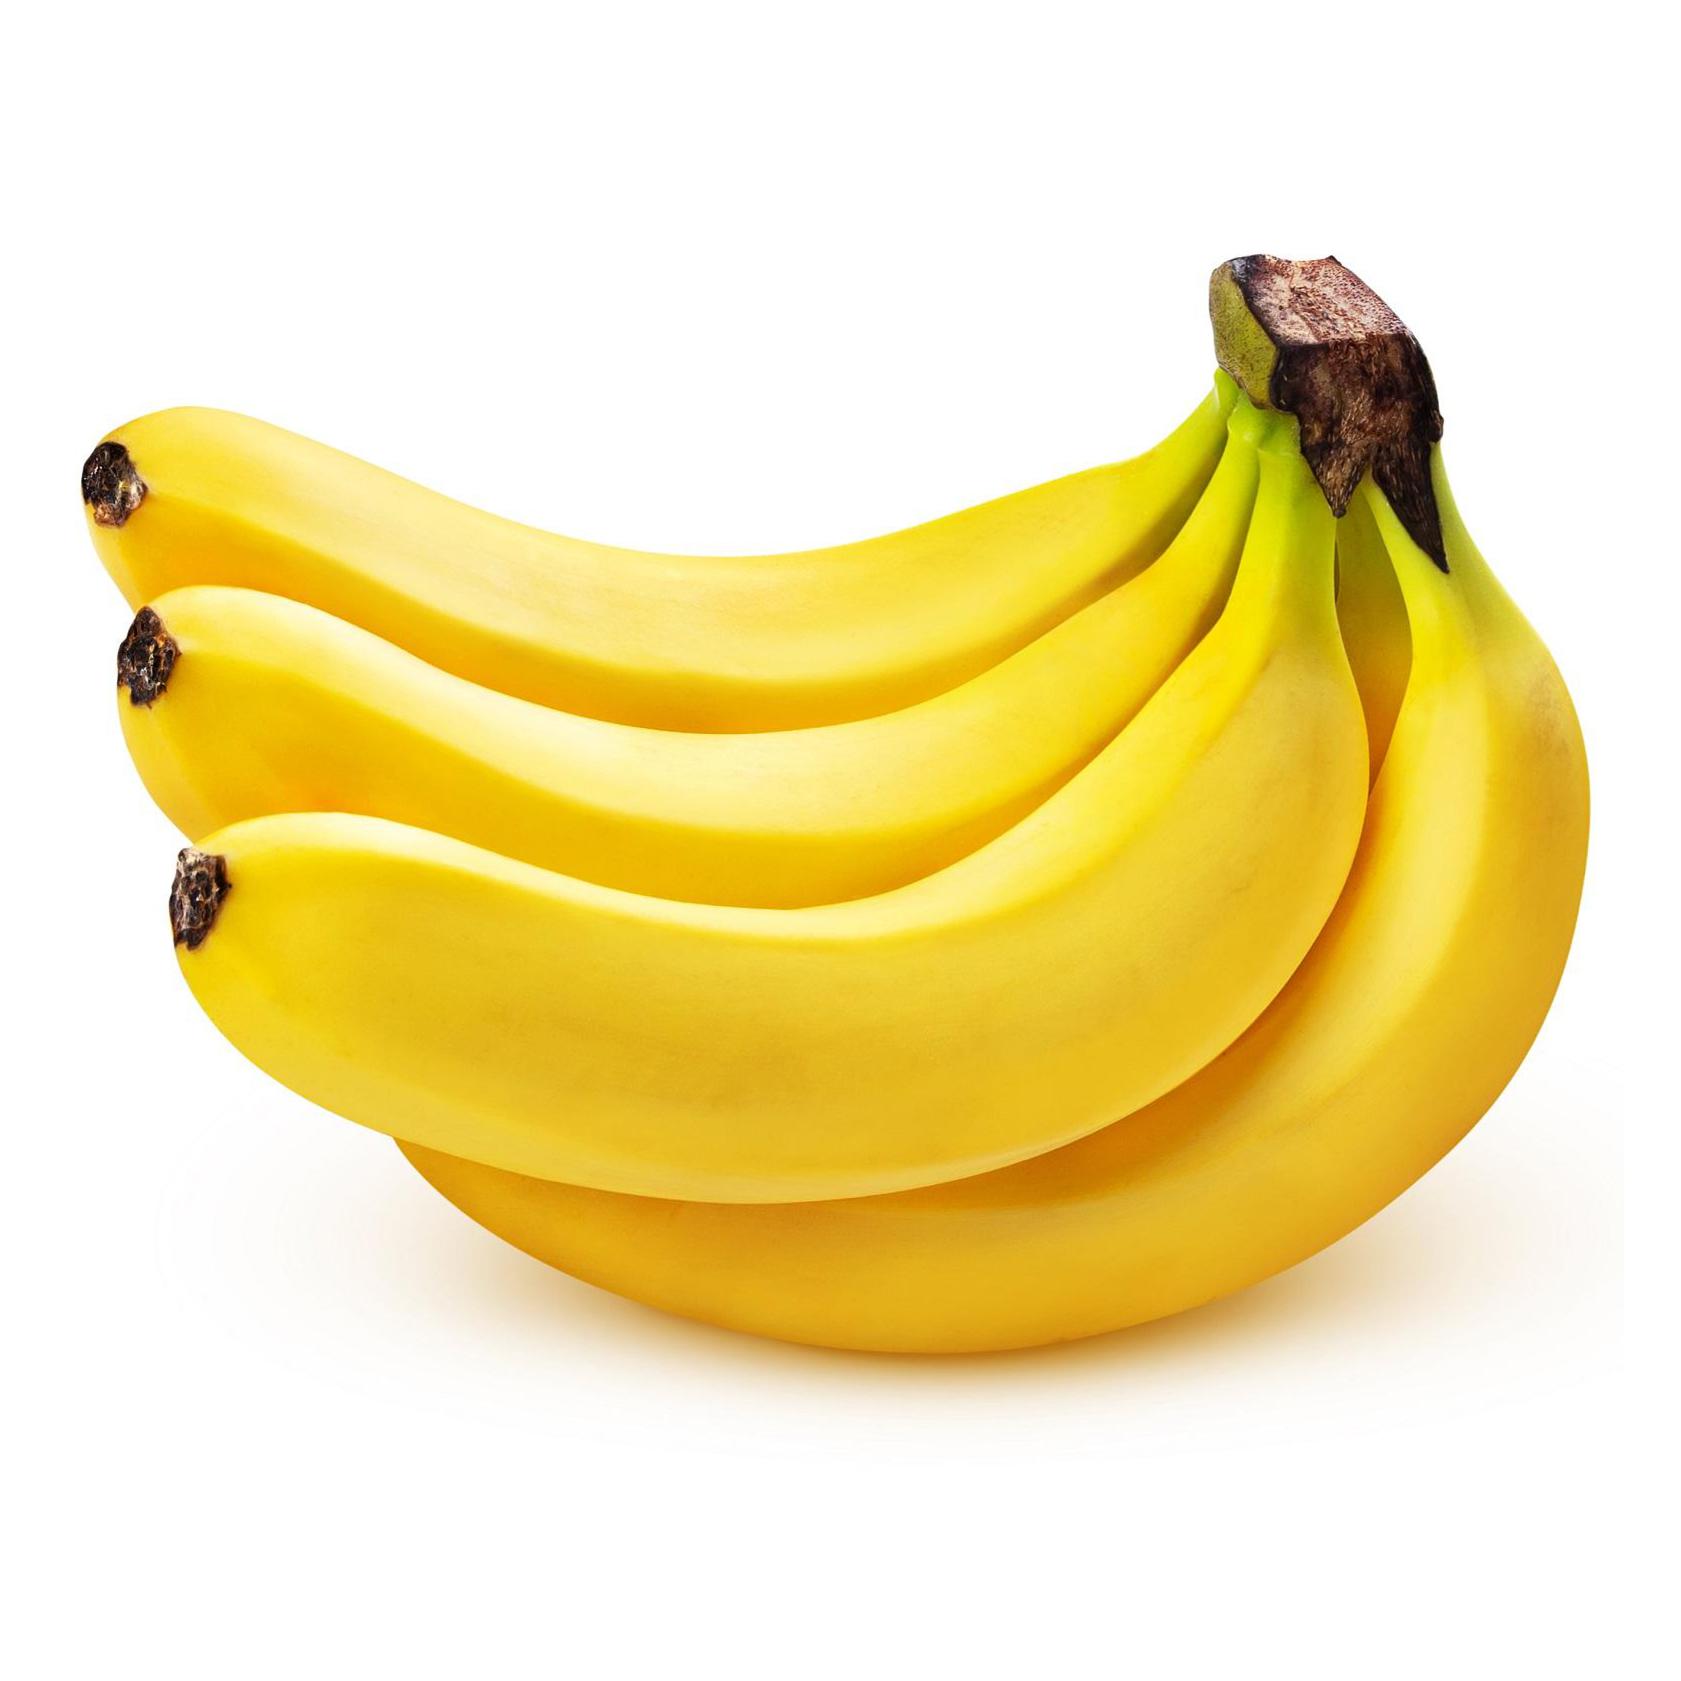 Где можно купит банан. Банан. Бананы мини. Гроздь бананов. Отдушка банан.